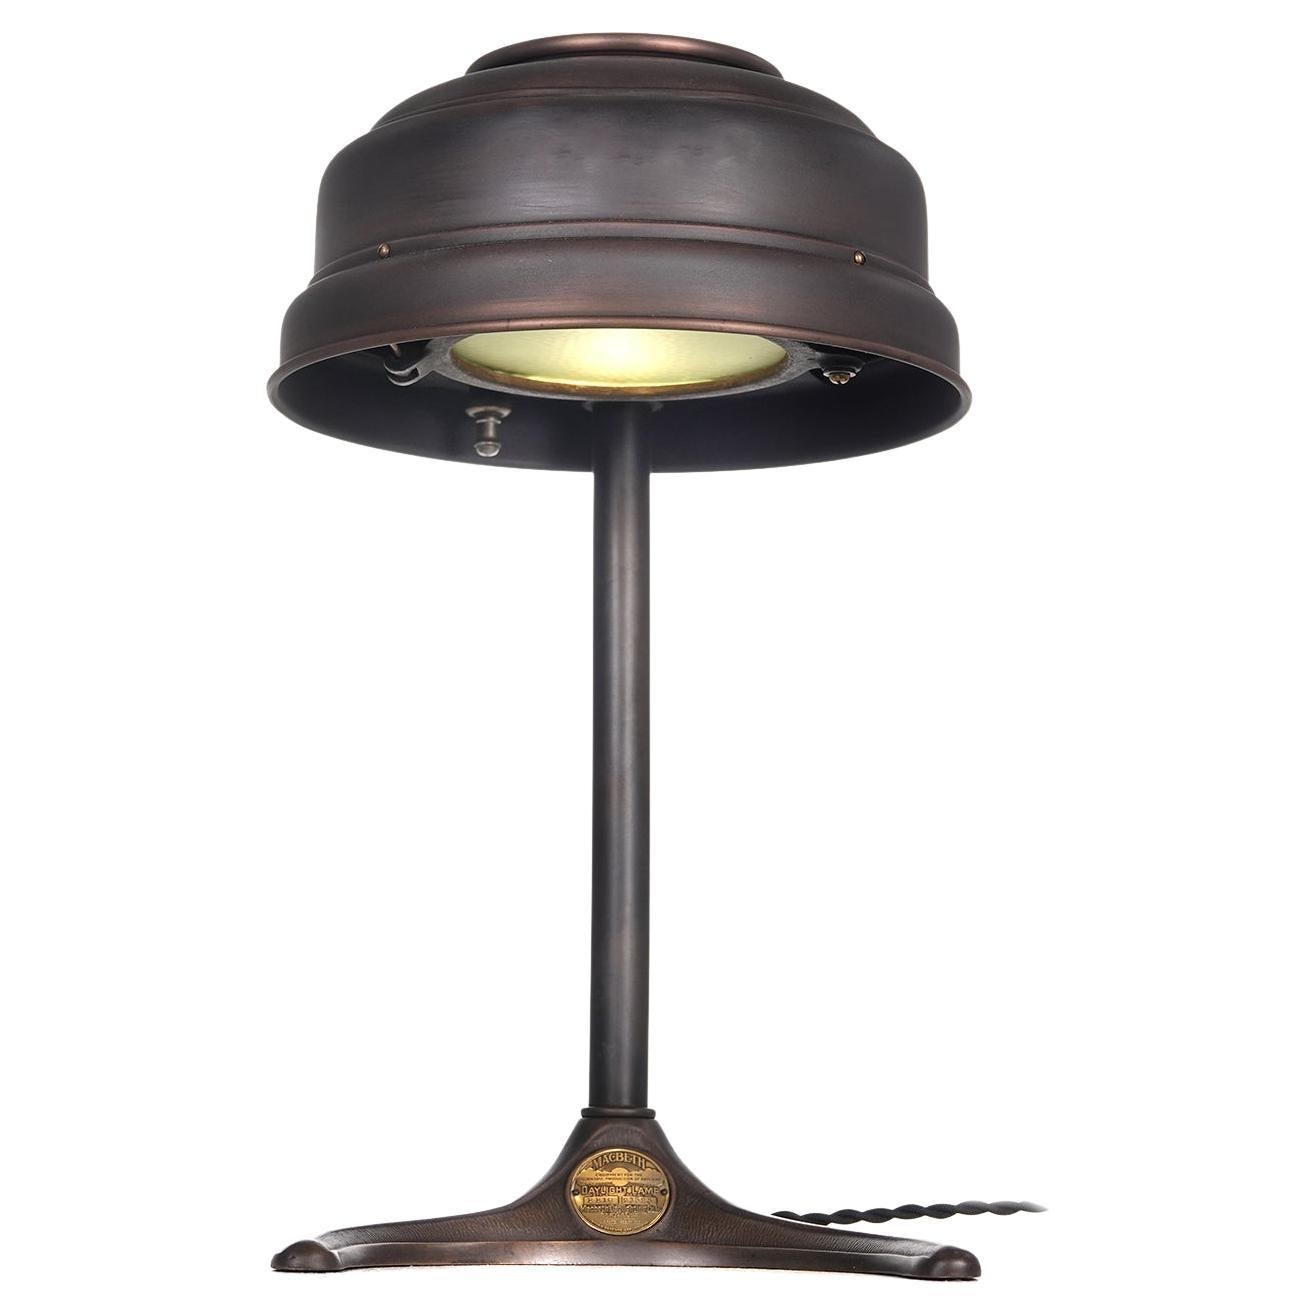 Rare Macbeth Daylight Counter Lamp For Sale